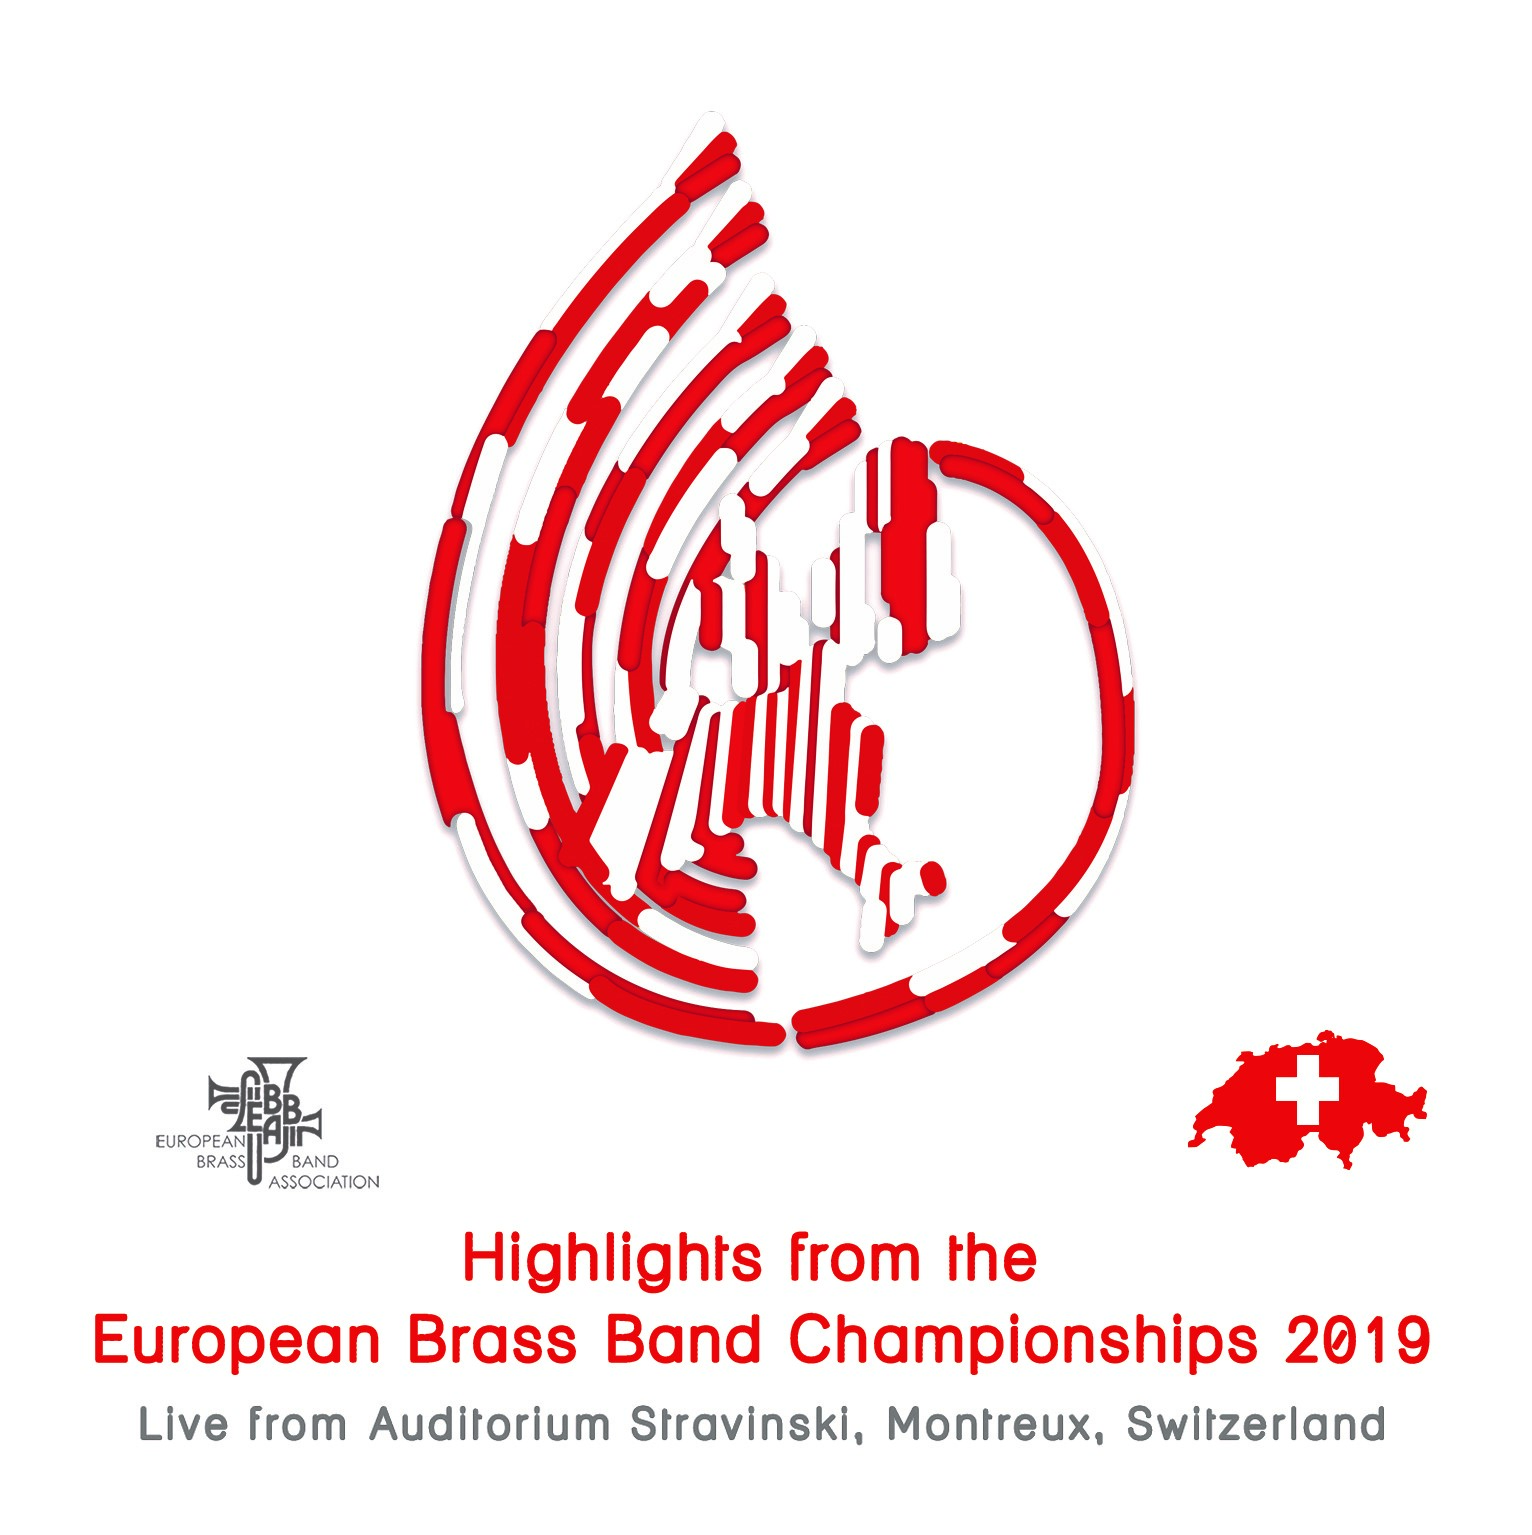 European Brass Band Championships 2019 - Download